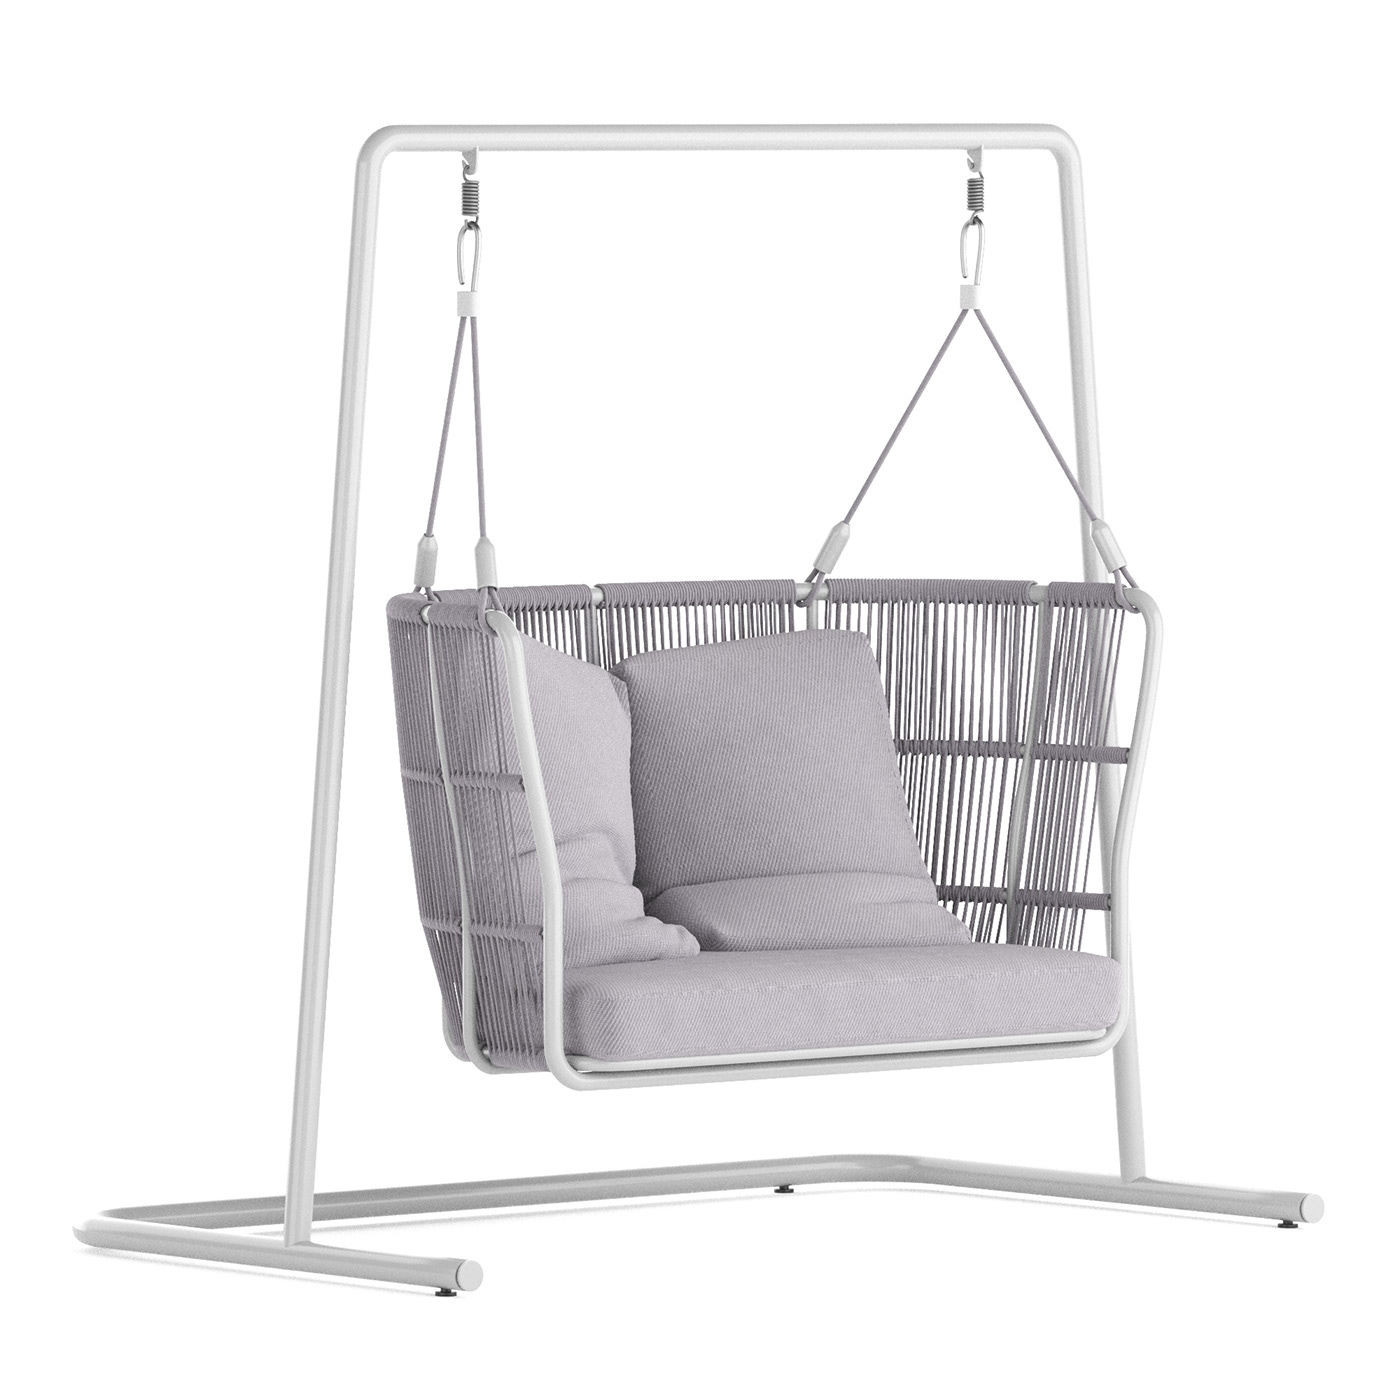 3D 3dart armchair chair furniture garden hanging Outdoor seat yard